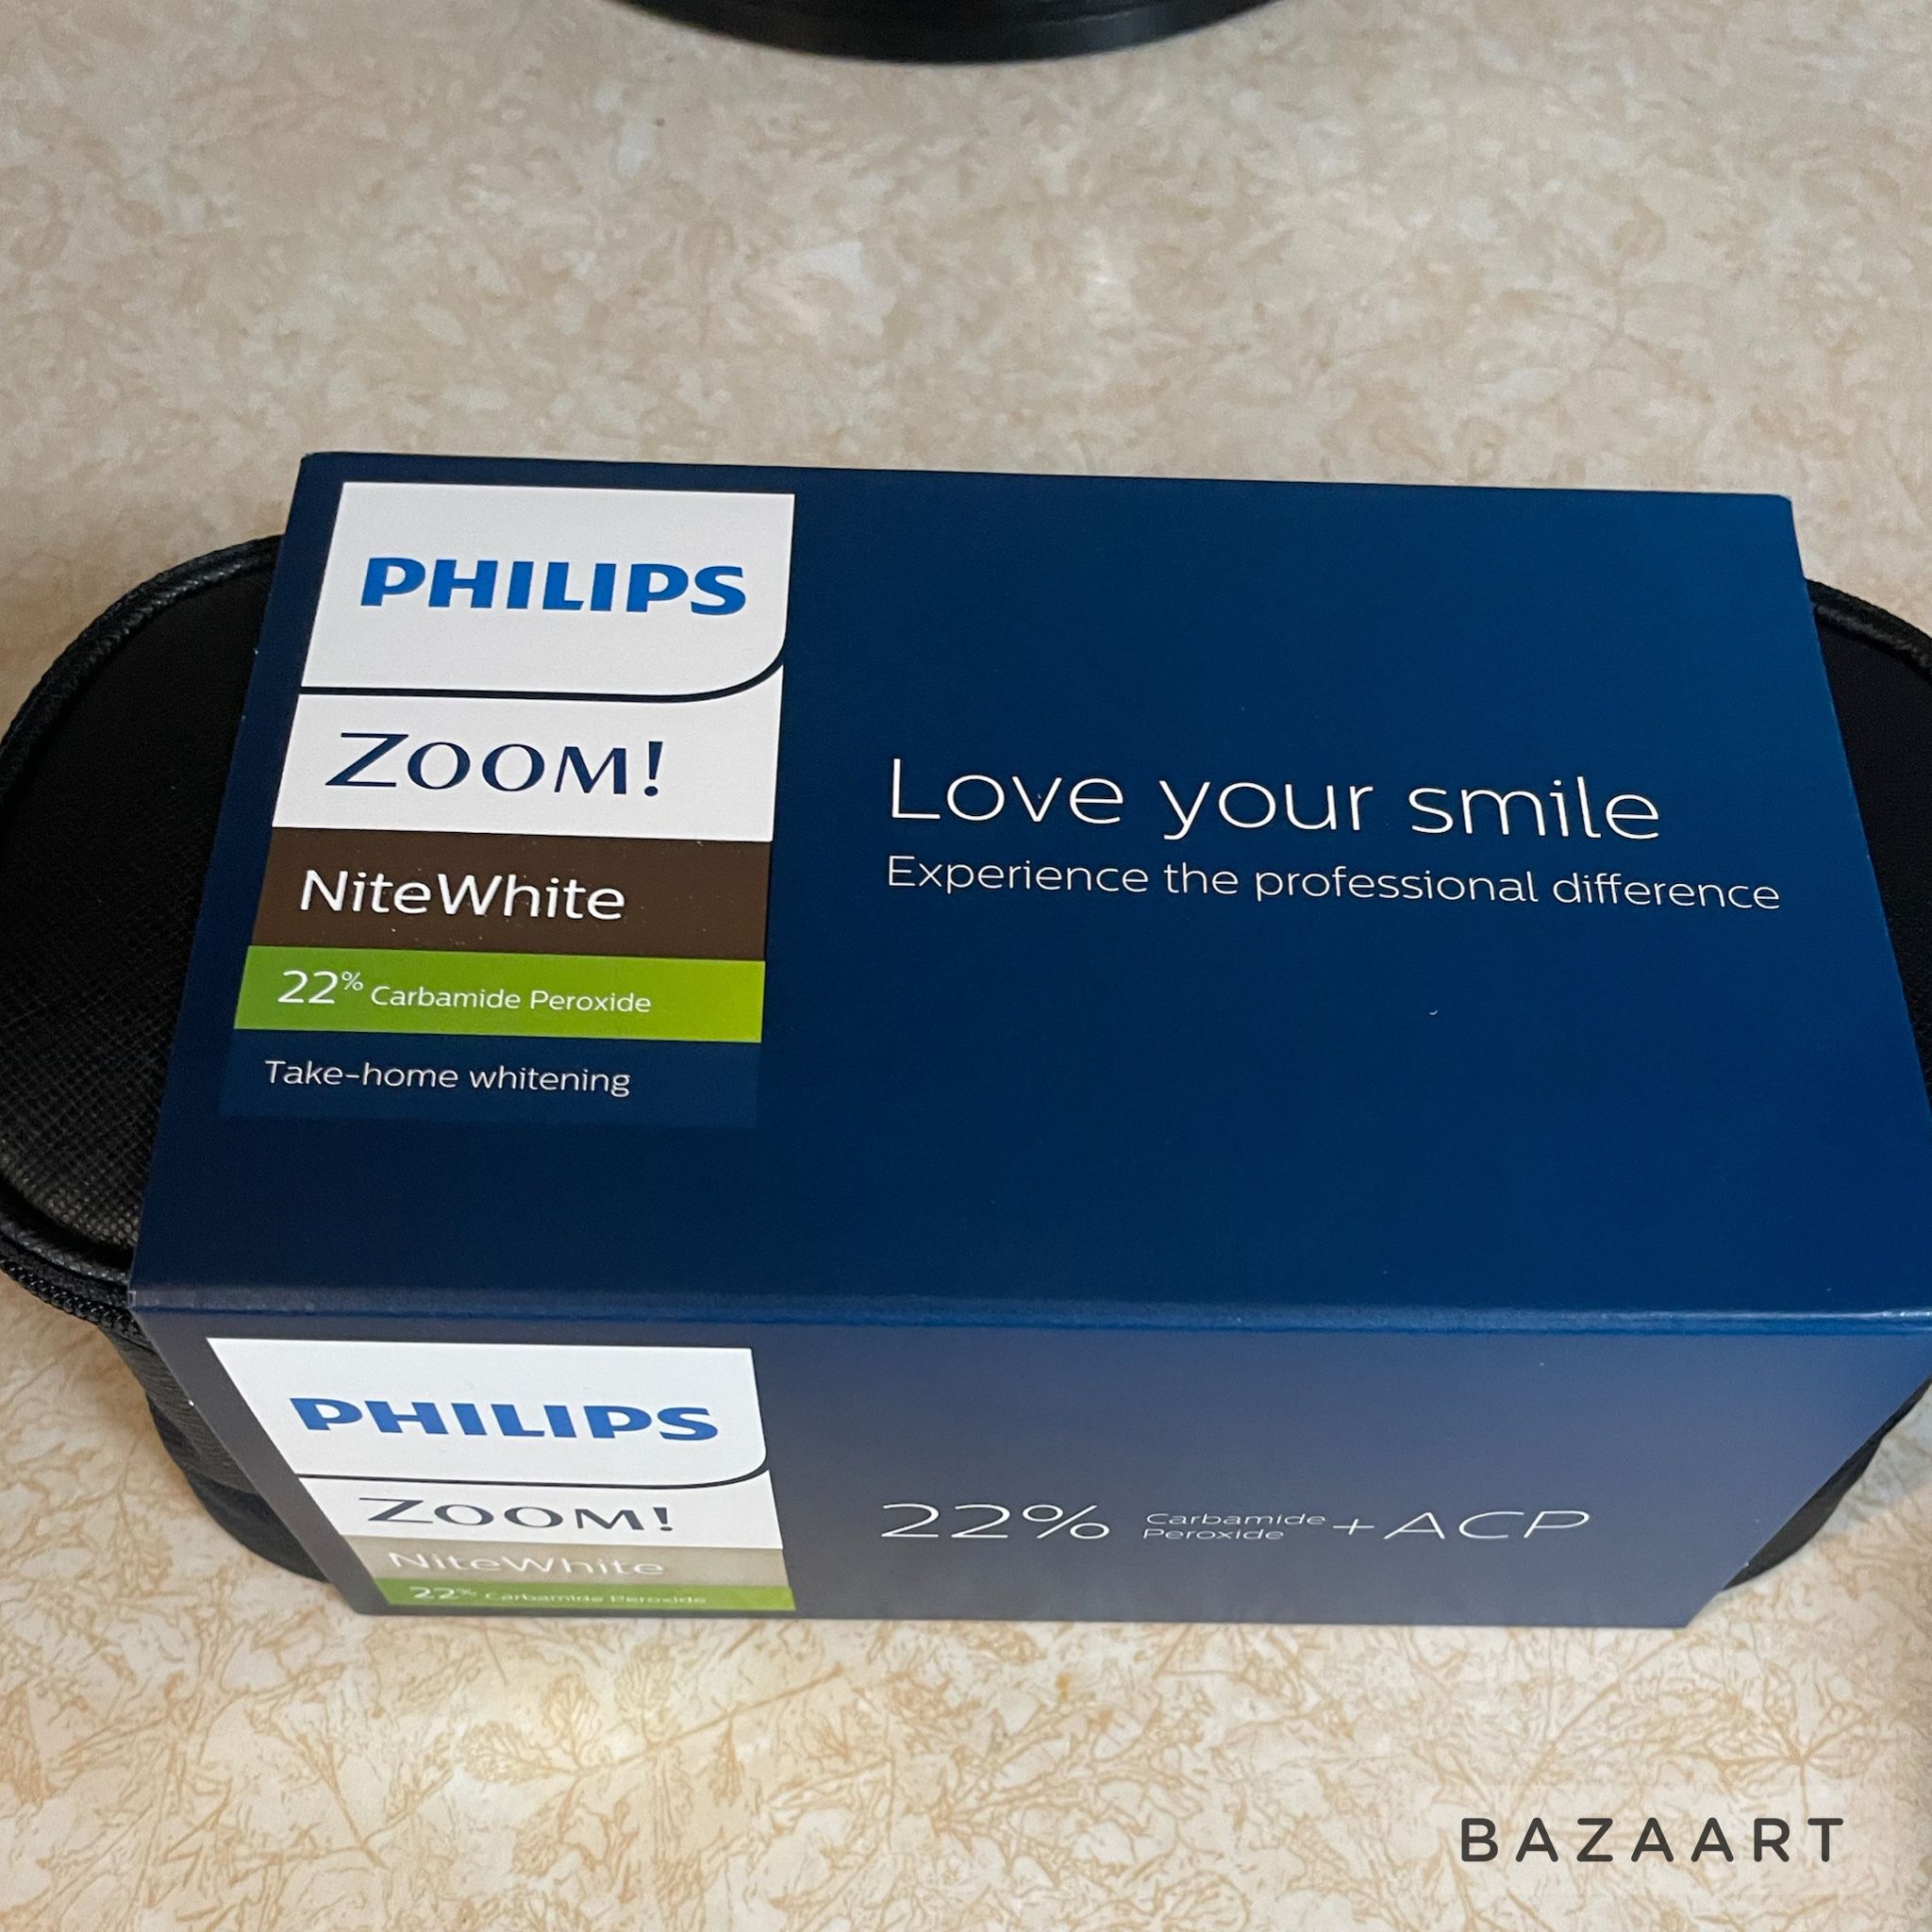 Philips Zoom! Professional NiteWhite Teeth Whitening Kit 16% Carbamide Peroxide